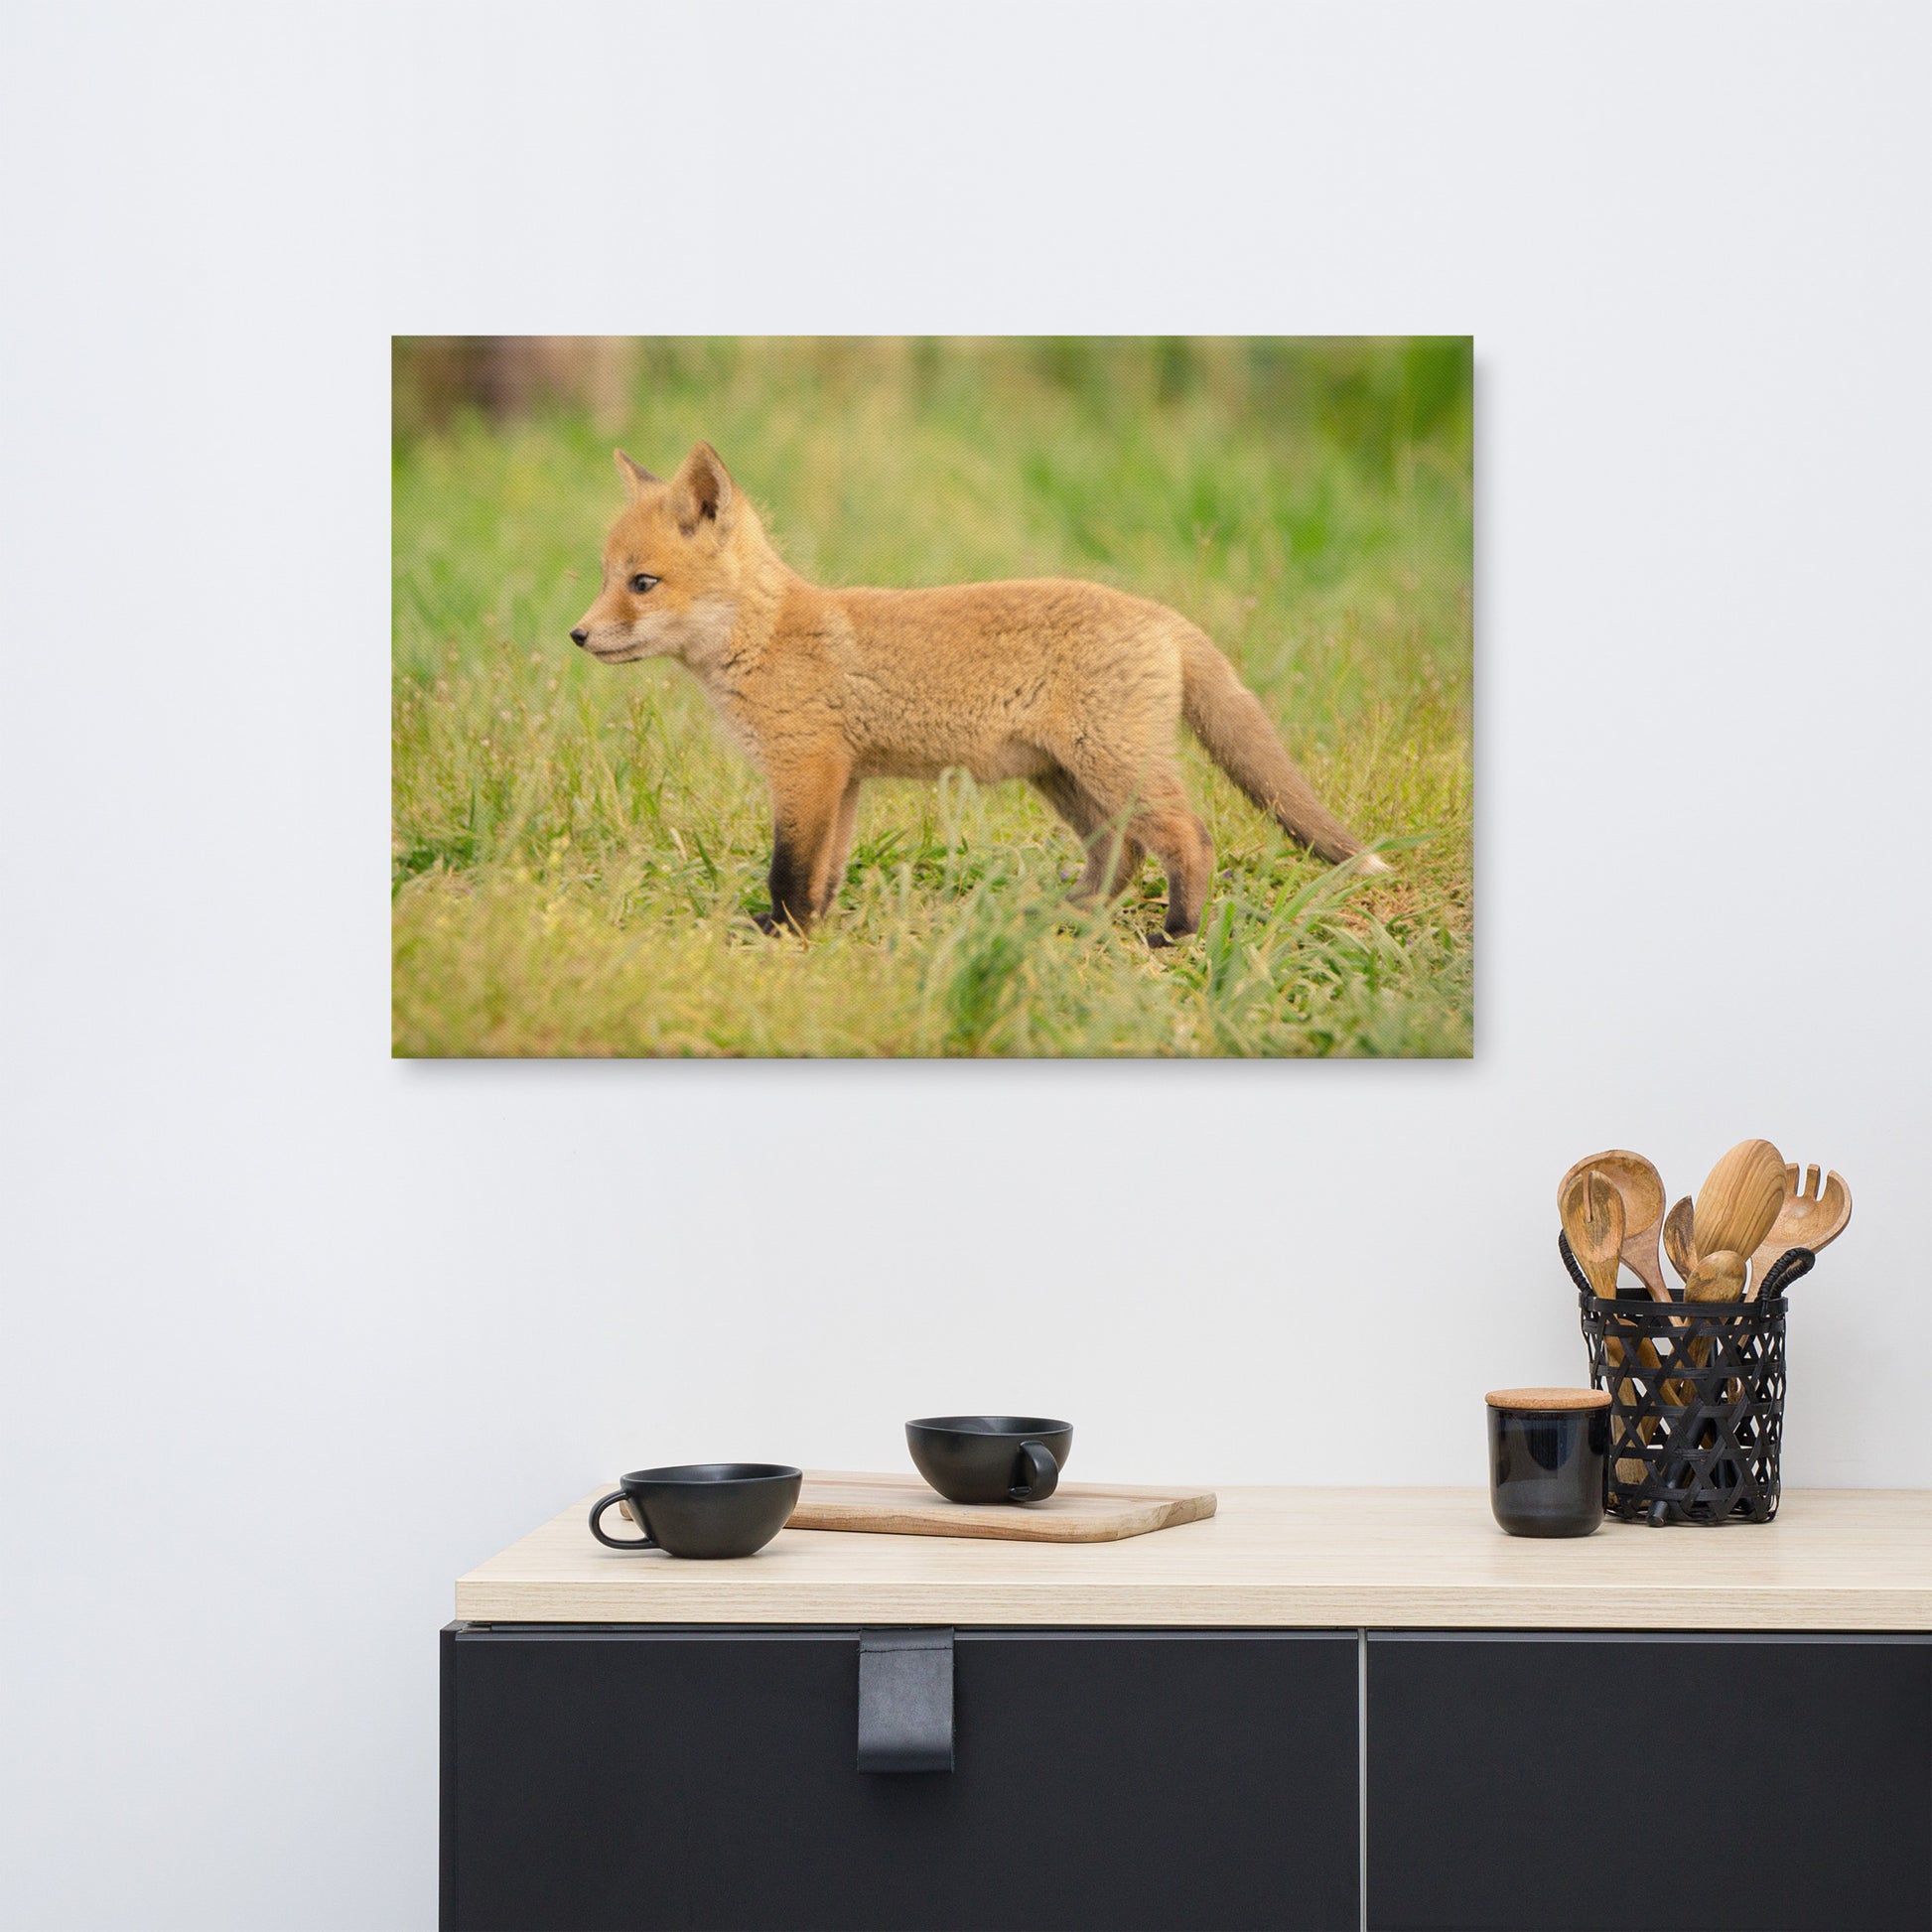 Simple Nursery Art: Fox Pup In Meadow - Wildlife / Animal / Nature Photograph Canvas Wall Art Print - Artwork - Wall Decor